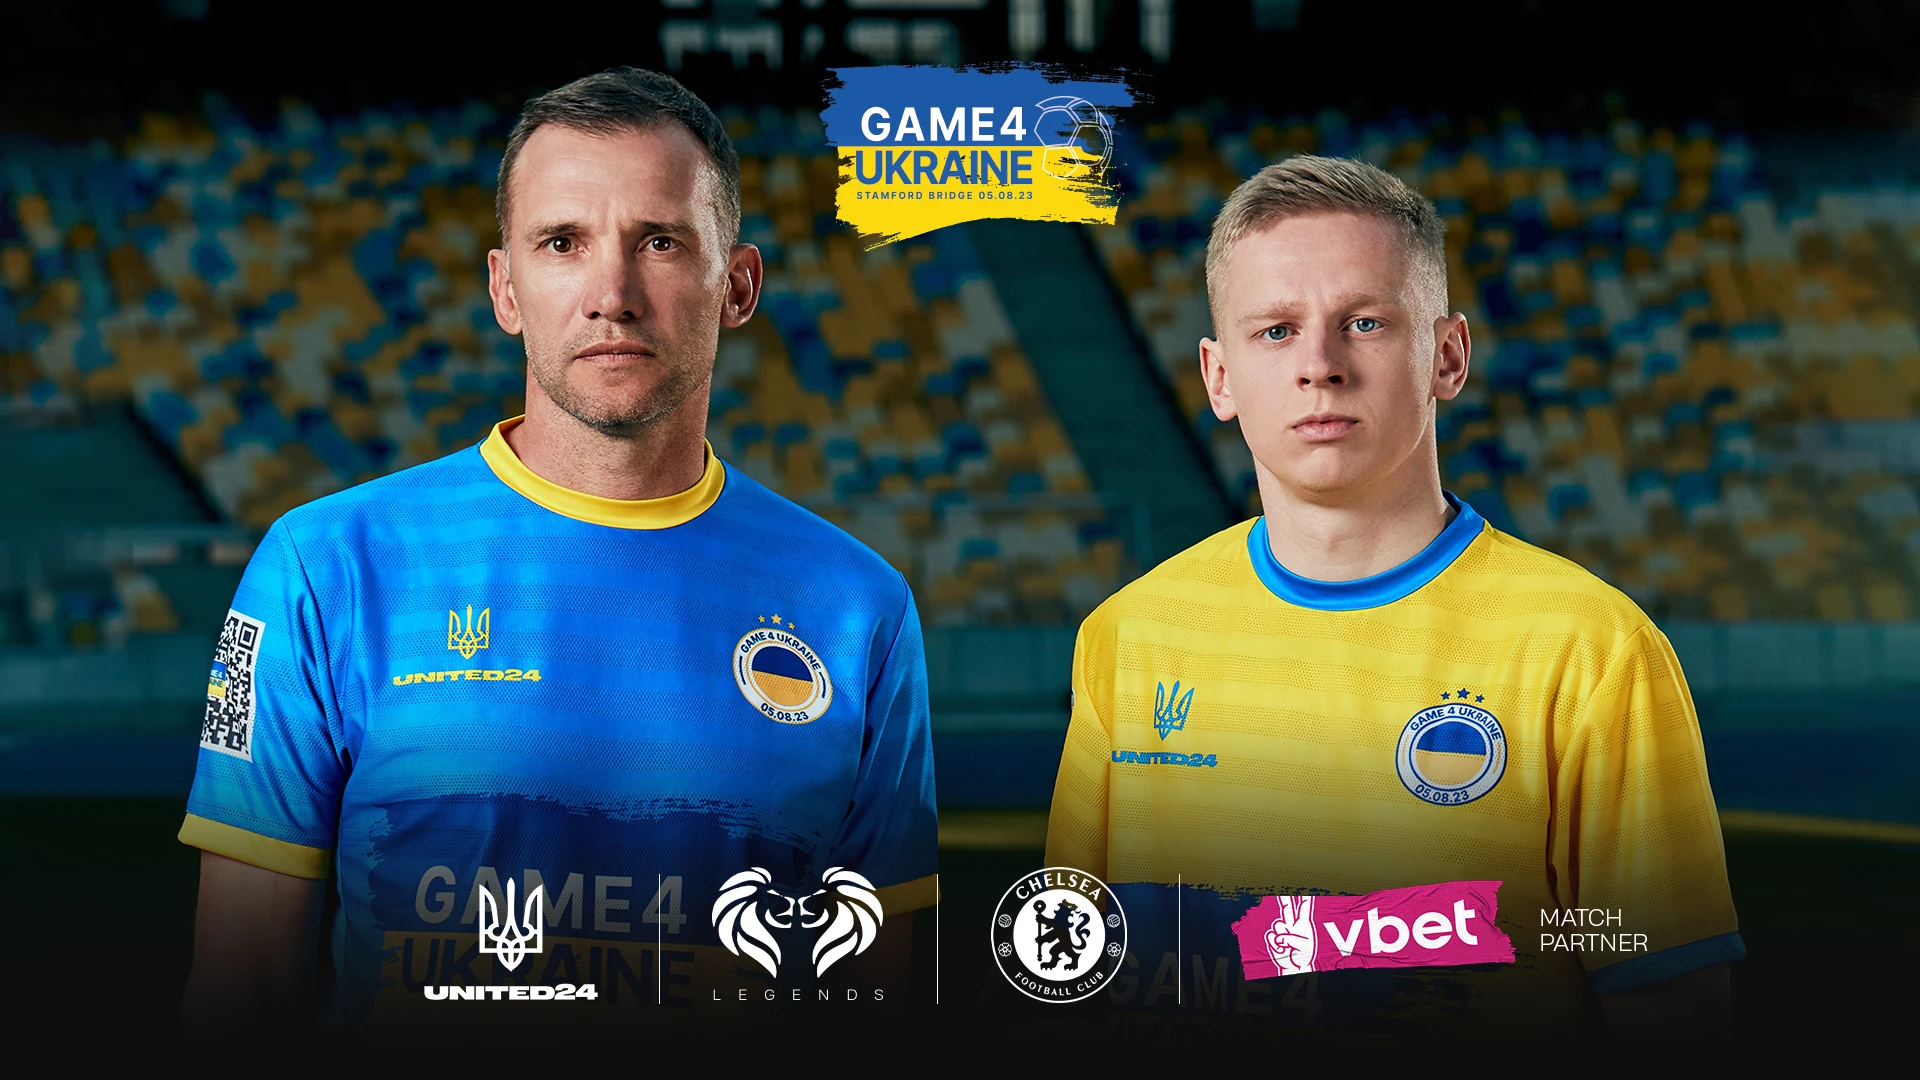 VBet_Game for Ukraine_image